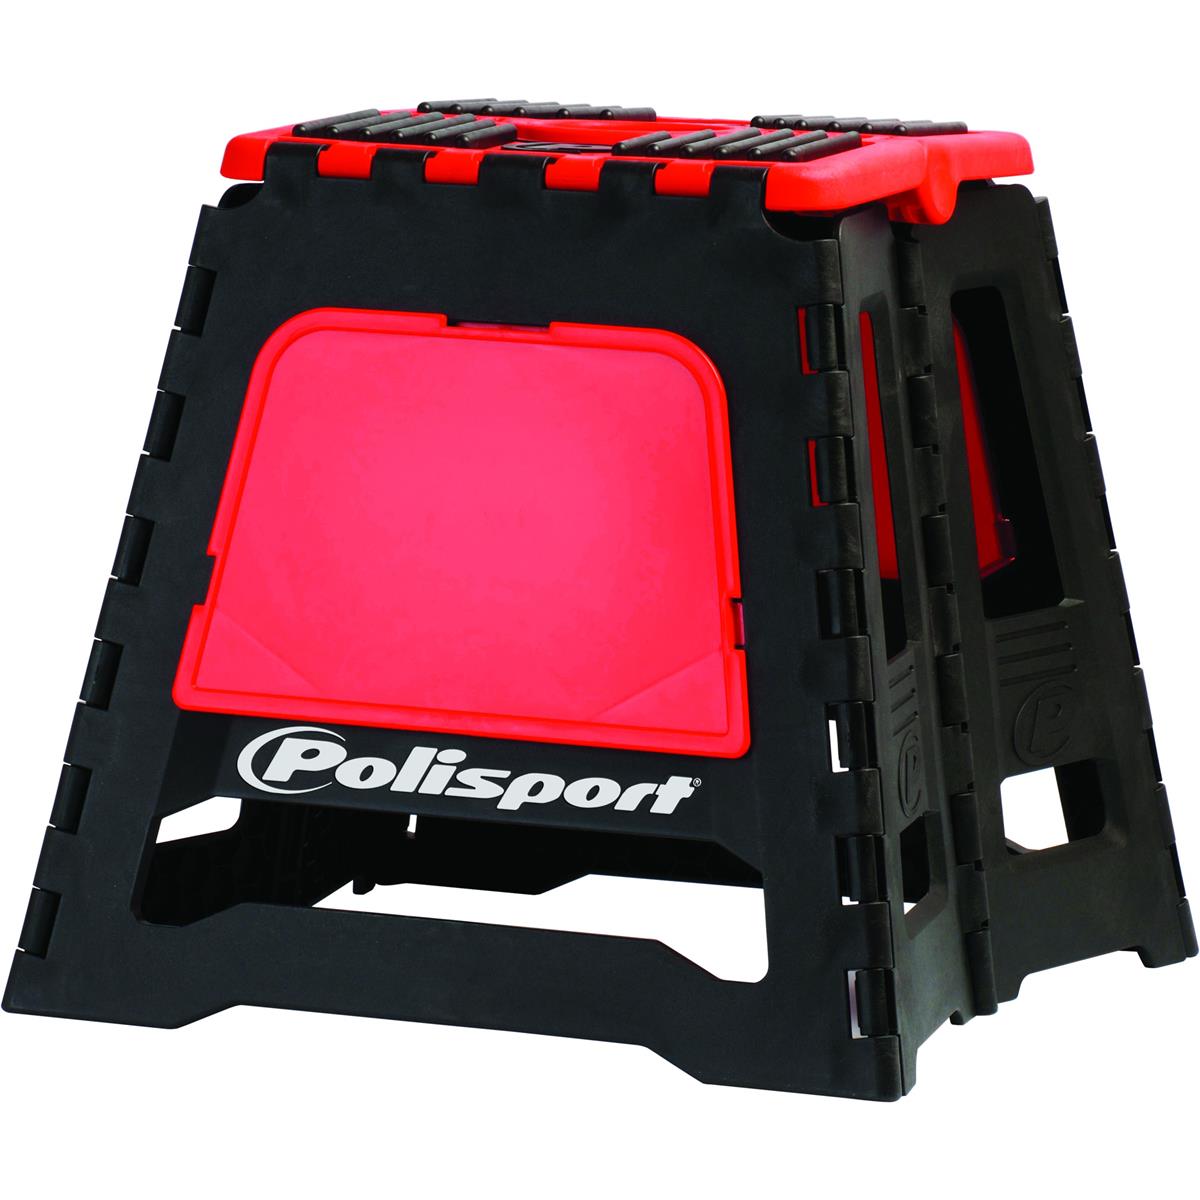 Polisport Bike Stand  Foldable, Black/Red